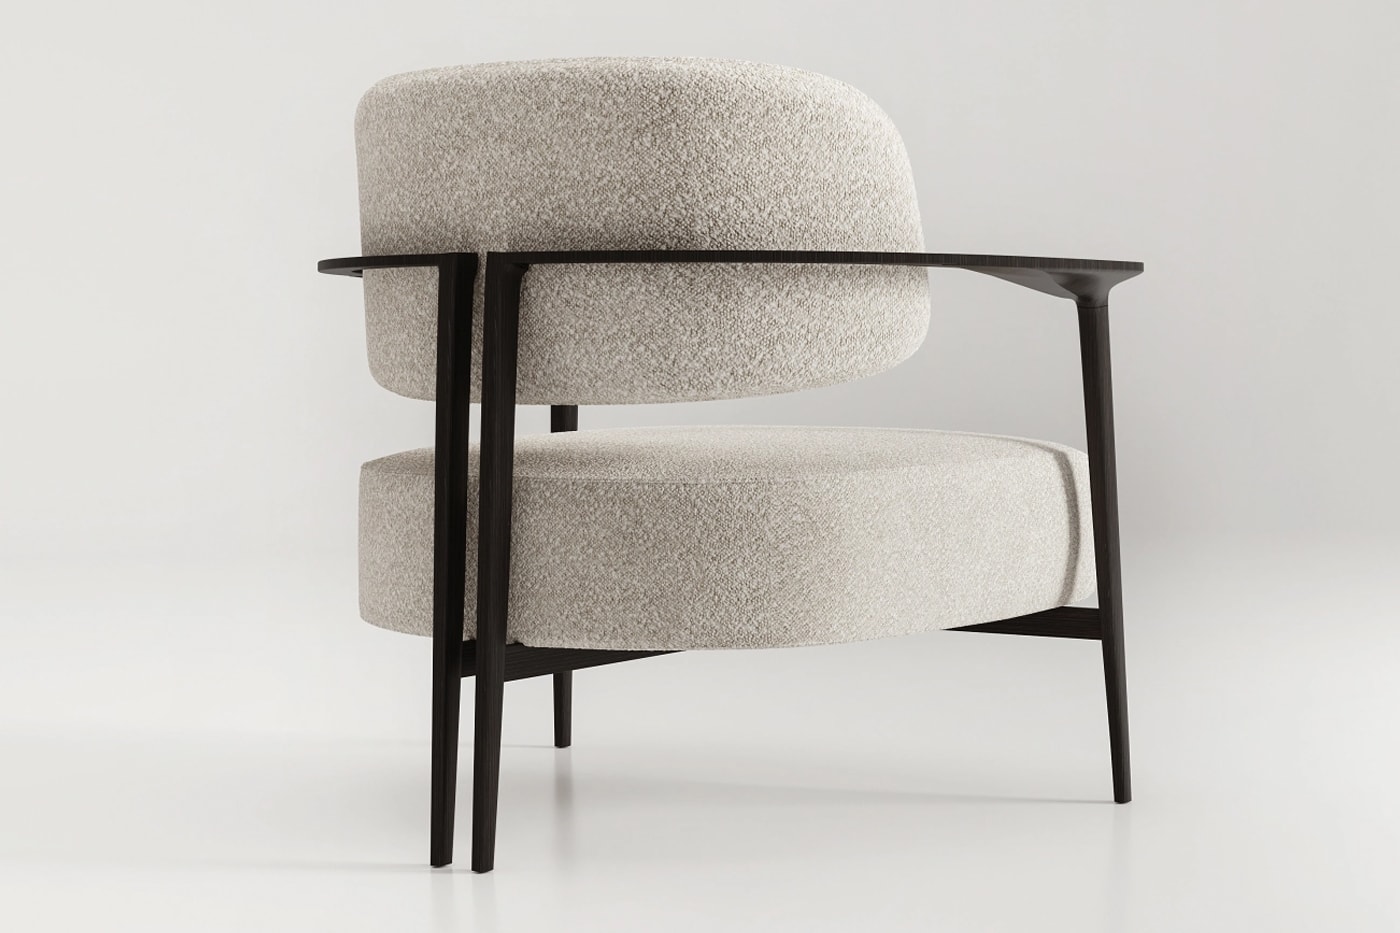 Karl Lagerfeld Brand Launches Namesake Luxury Furniture Collection chanel creative director philippe starck cassina italian furniture salone del mobile paris bauhaus art deco paris 